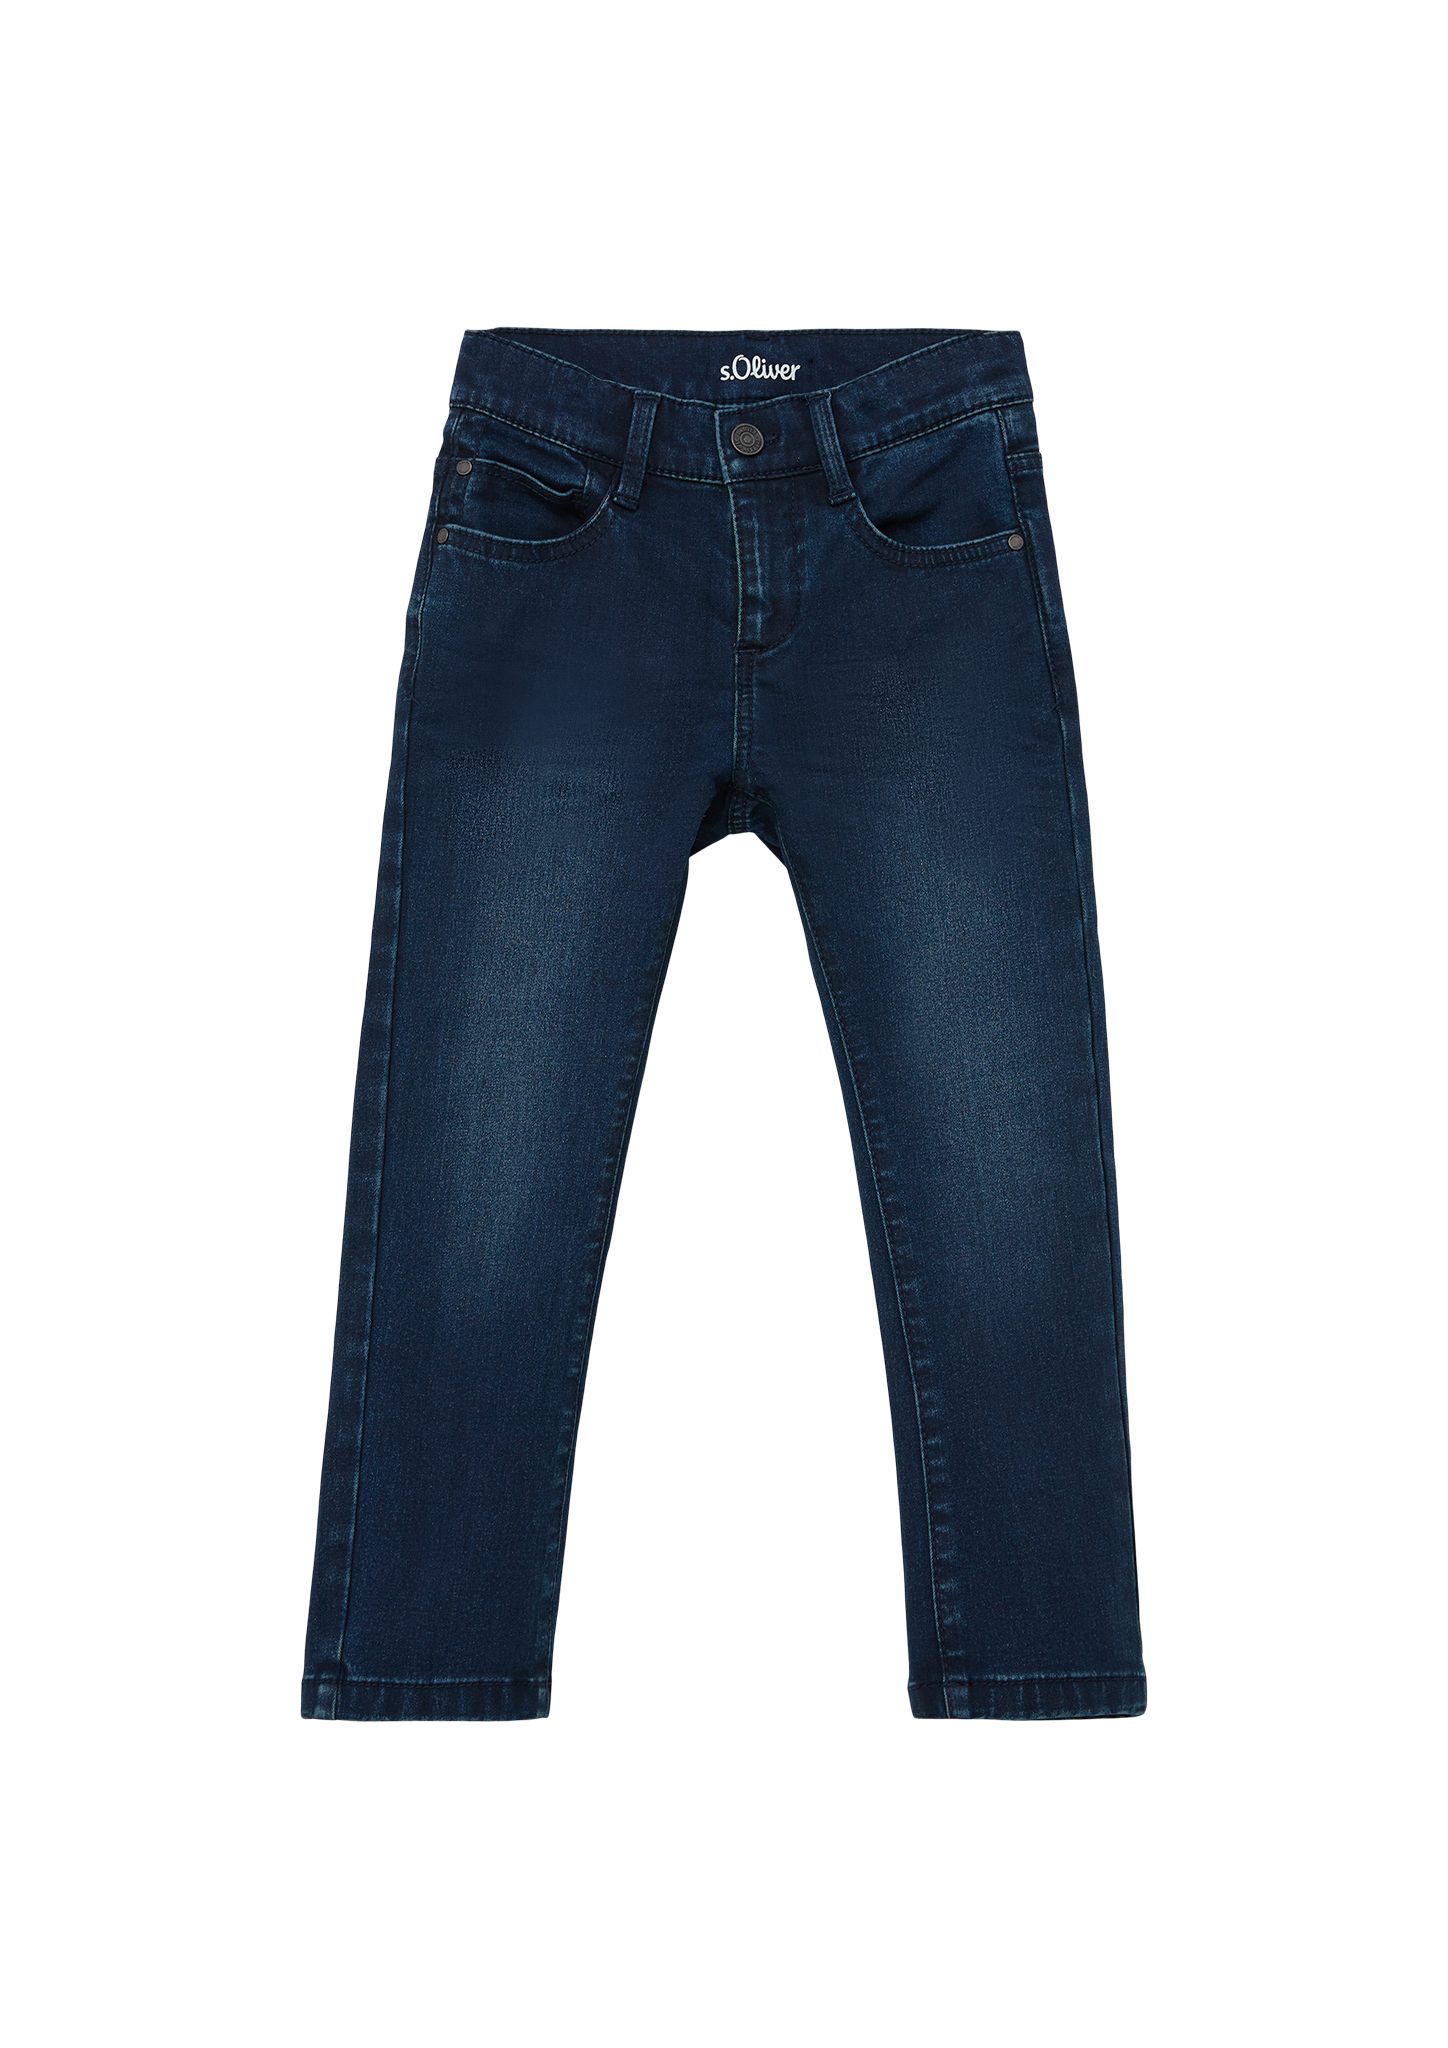 Pelle Straight s.Oliver Used-Look / Jeans / Leg Fit Mid / 5-Pocket-Jeans / Regular Waschung Rise Kontrastnähte,